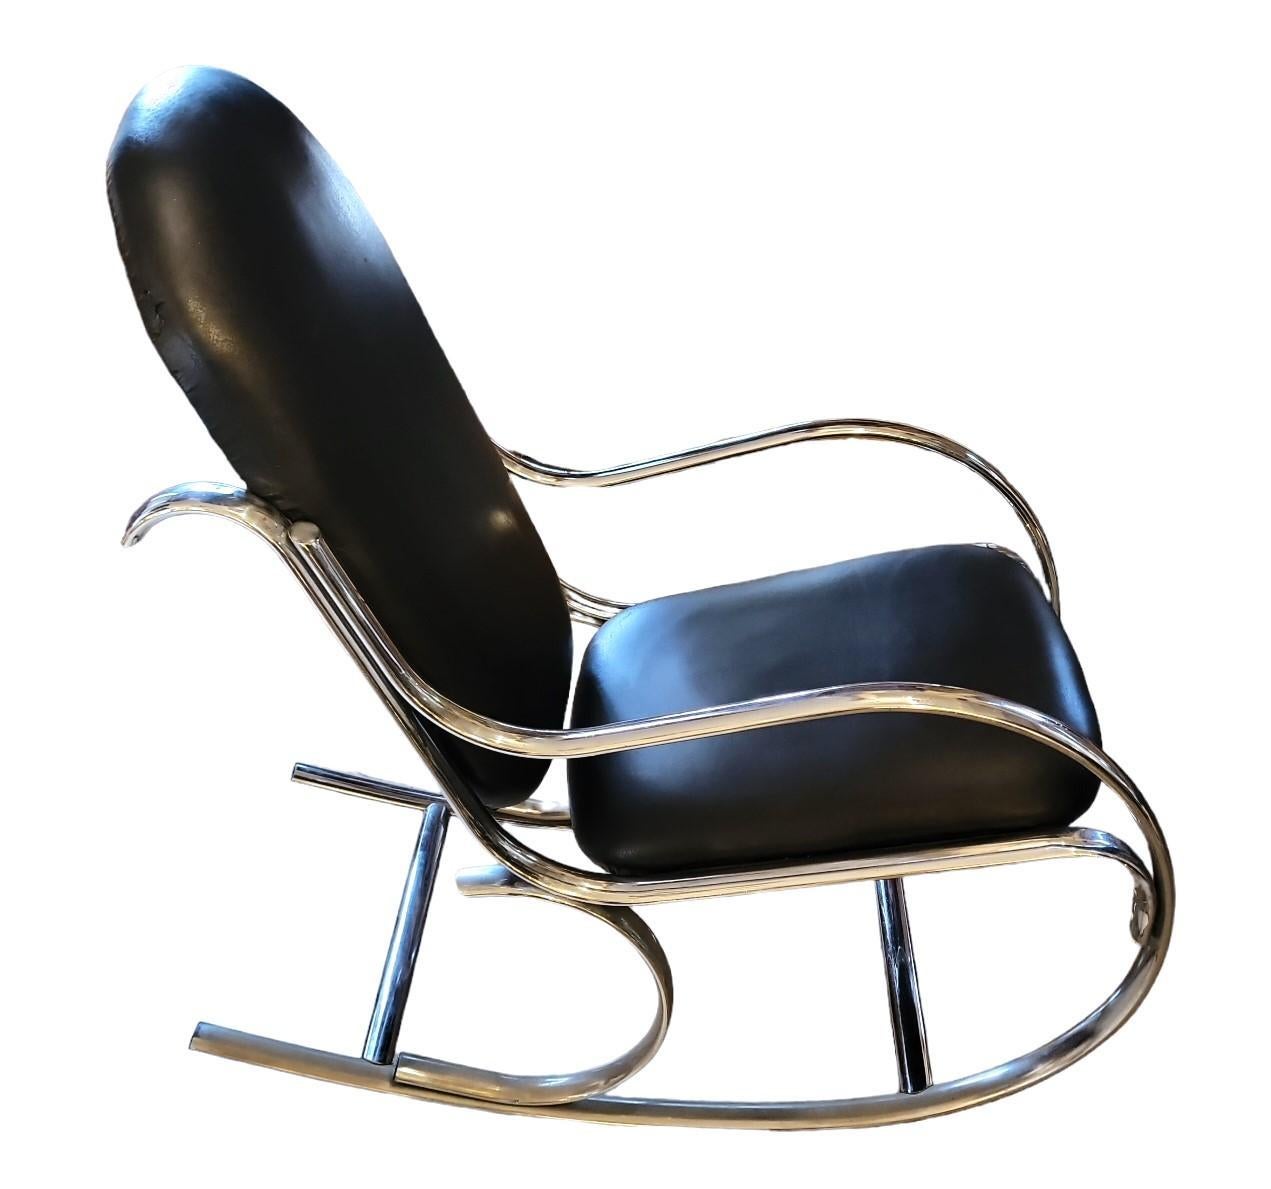 Late 20th Century 1980s Modern Chrome Thonet-Style Rocking Chair